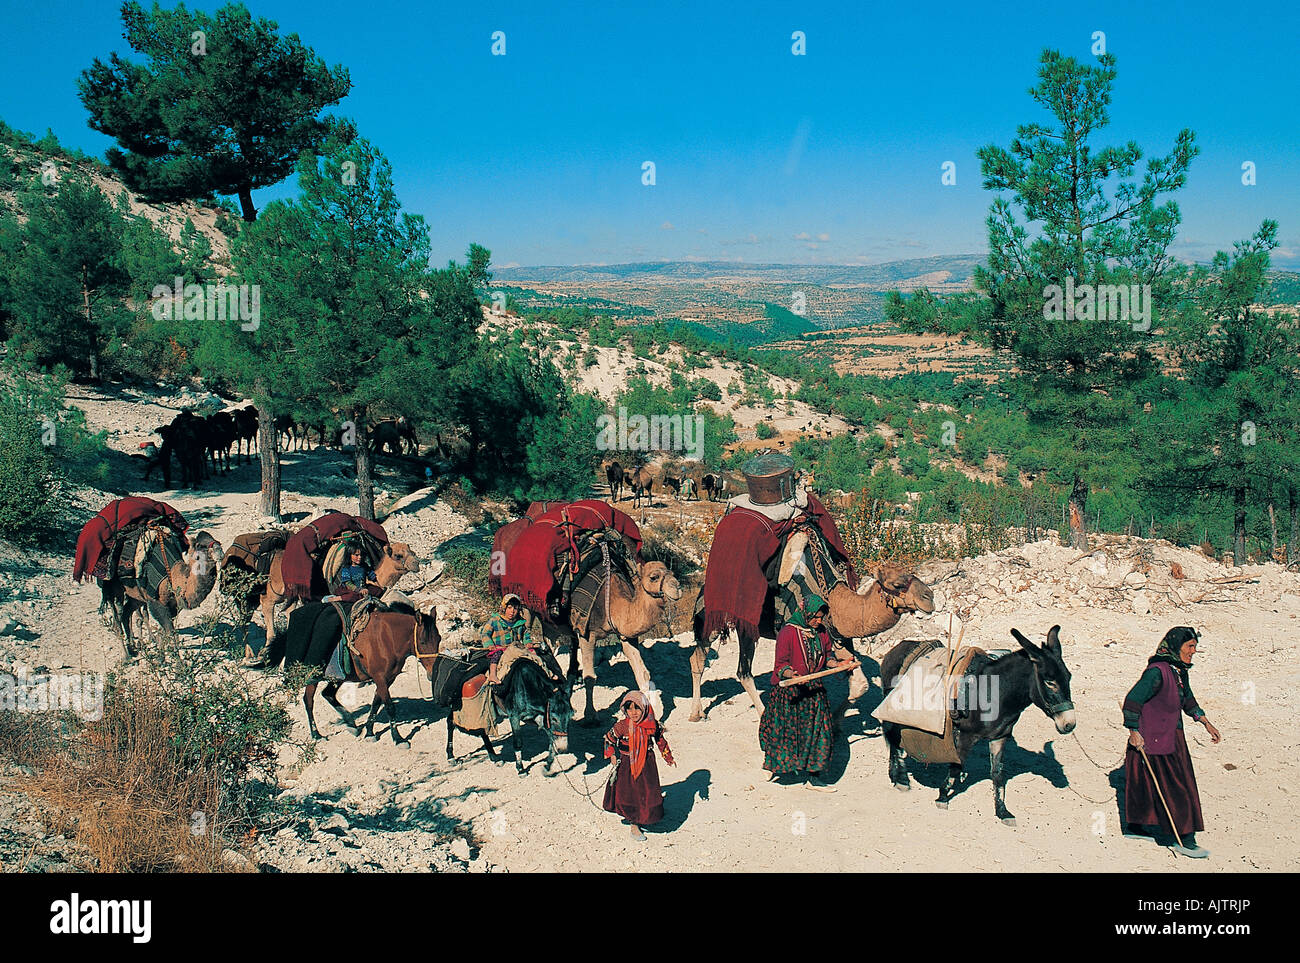 Karakecili tribù nomade carovana in sui monti Taurus, c'Anatolia, Turchia. Foto Stock